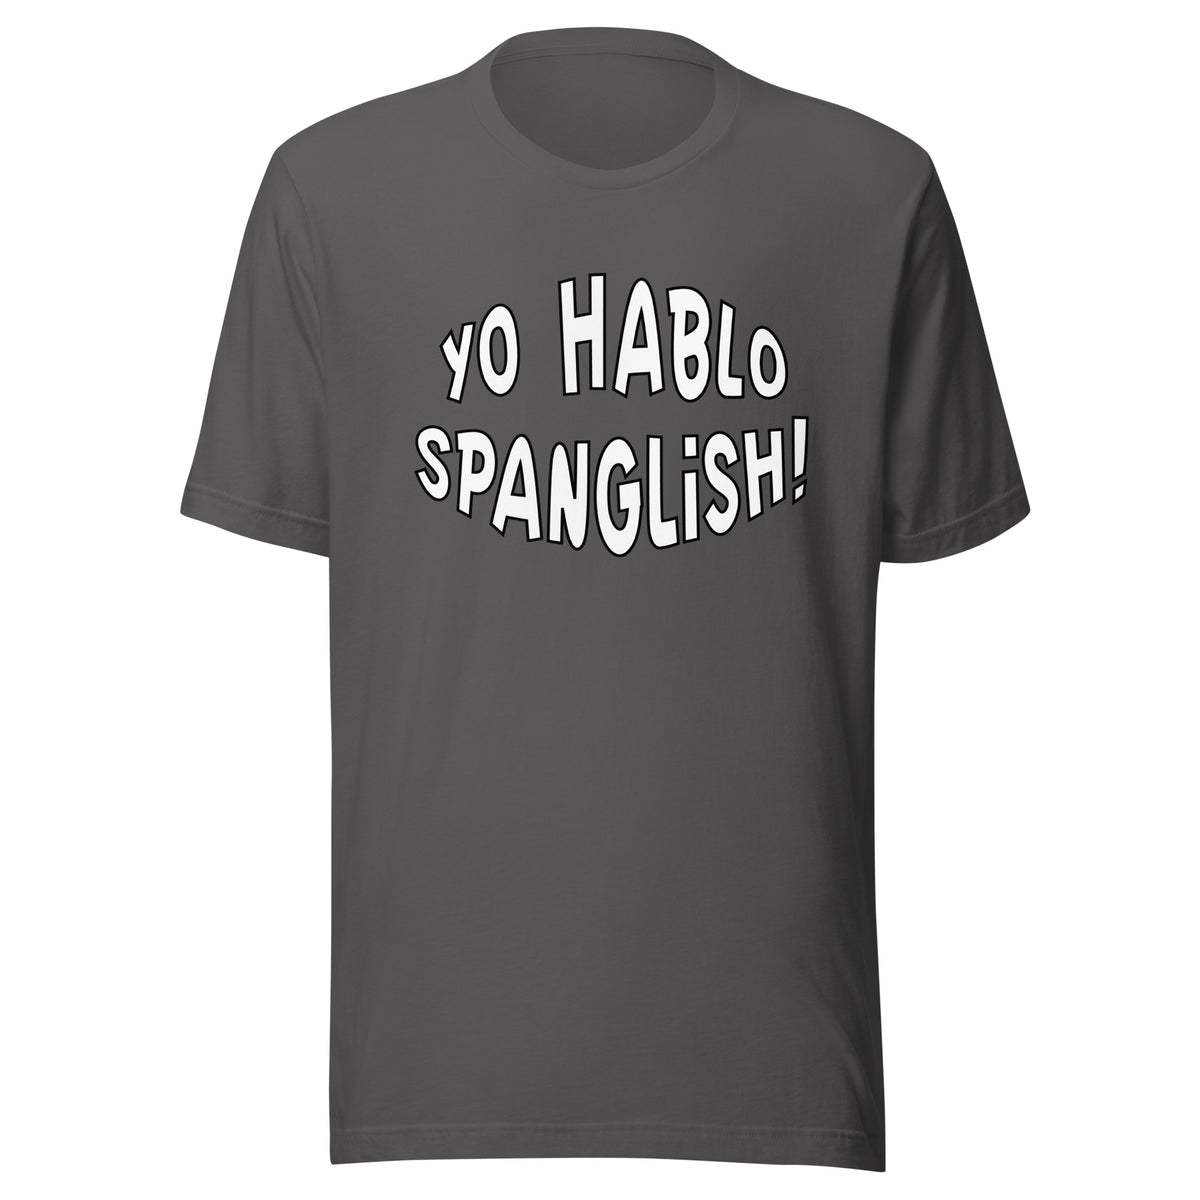 Hablo Spanglish T-shirt